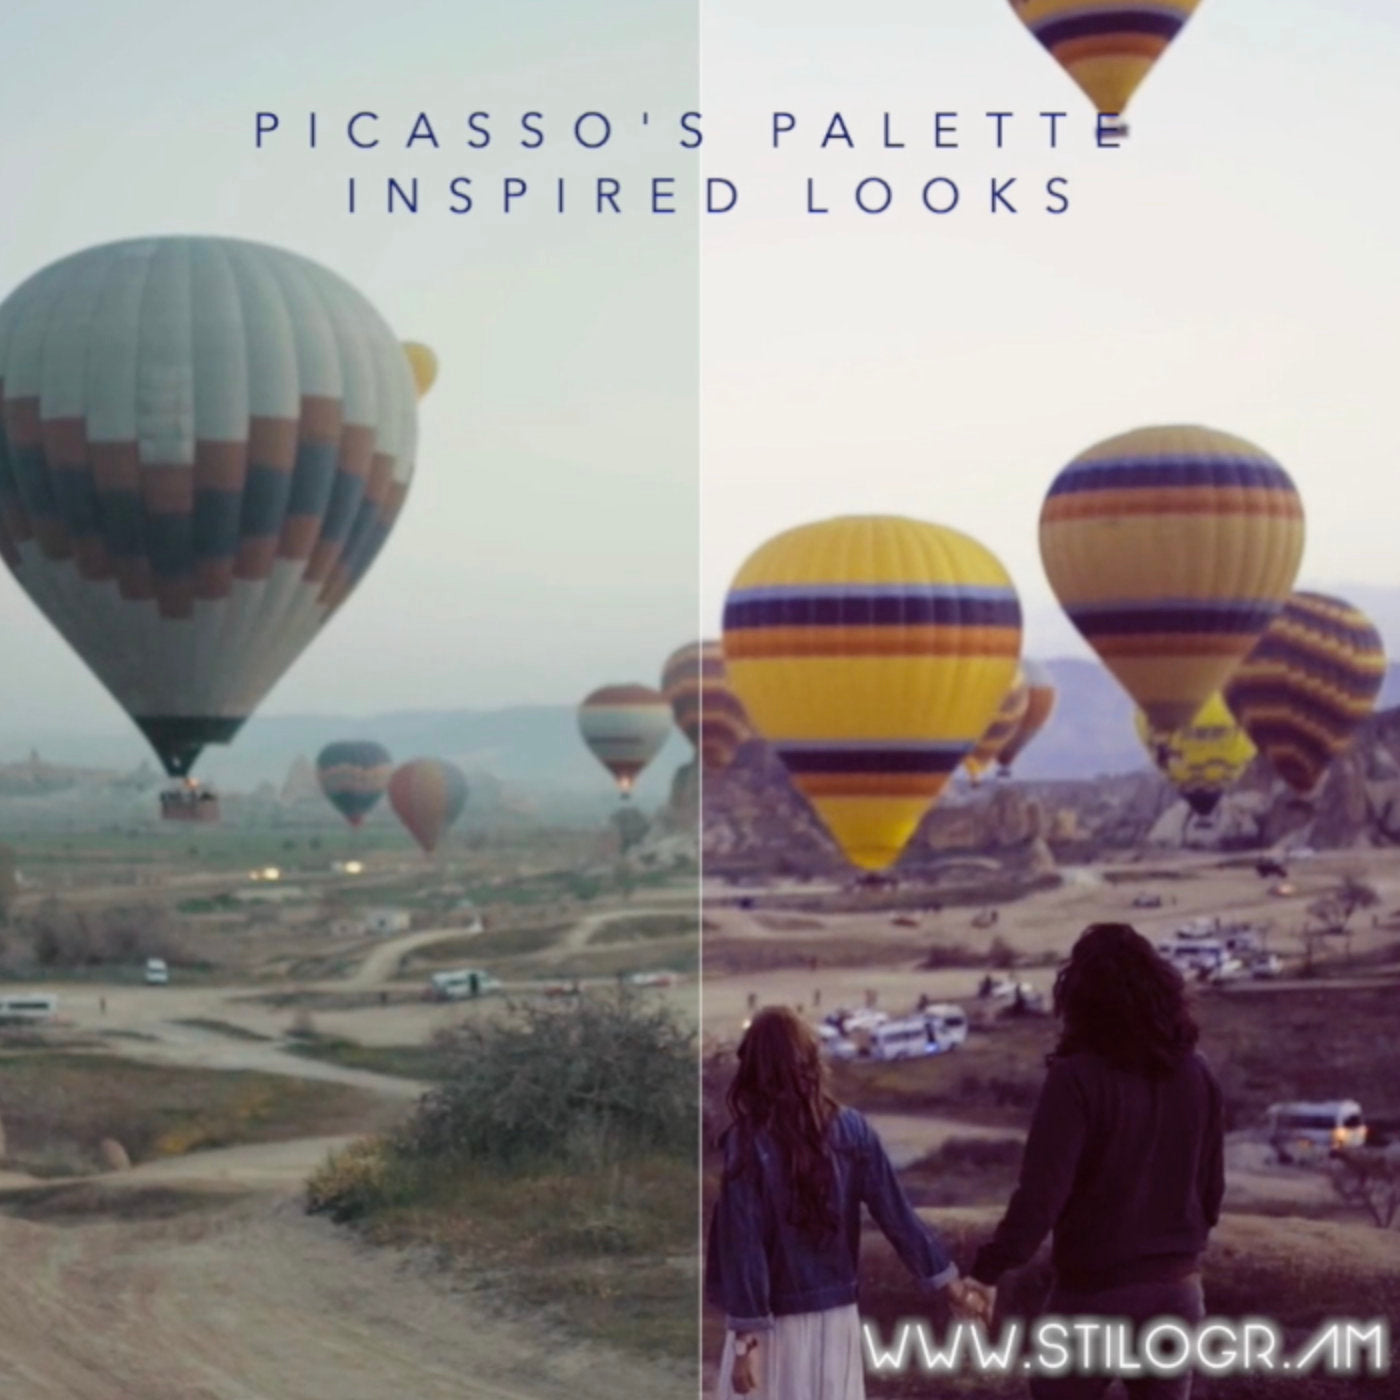 PICASSO'S palette